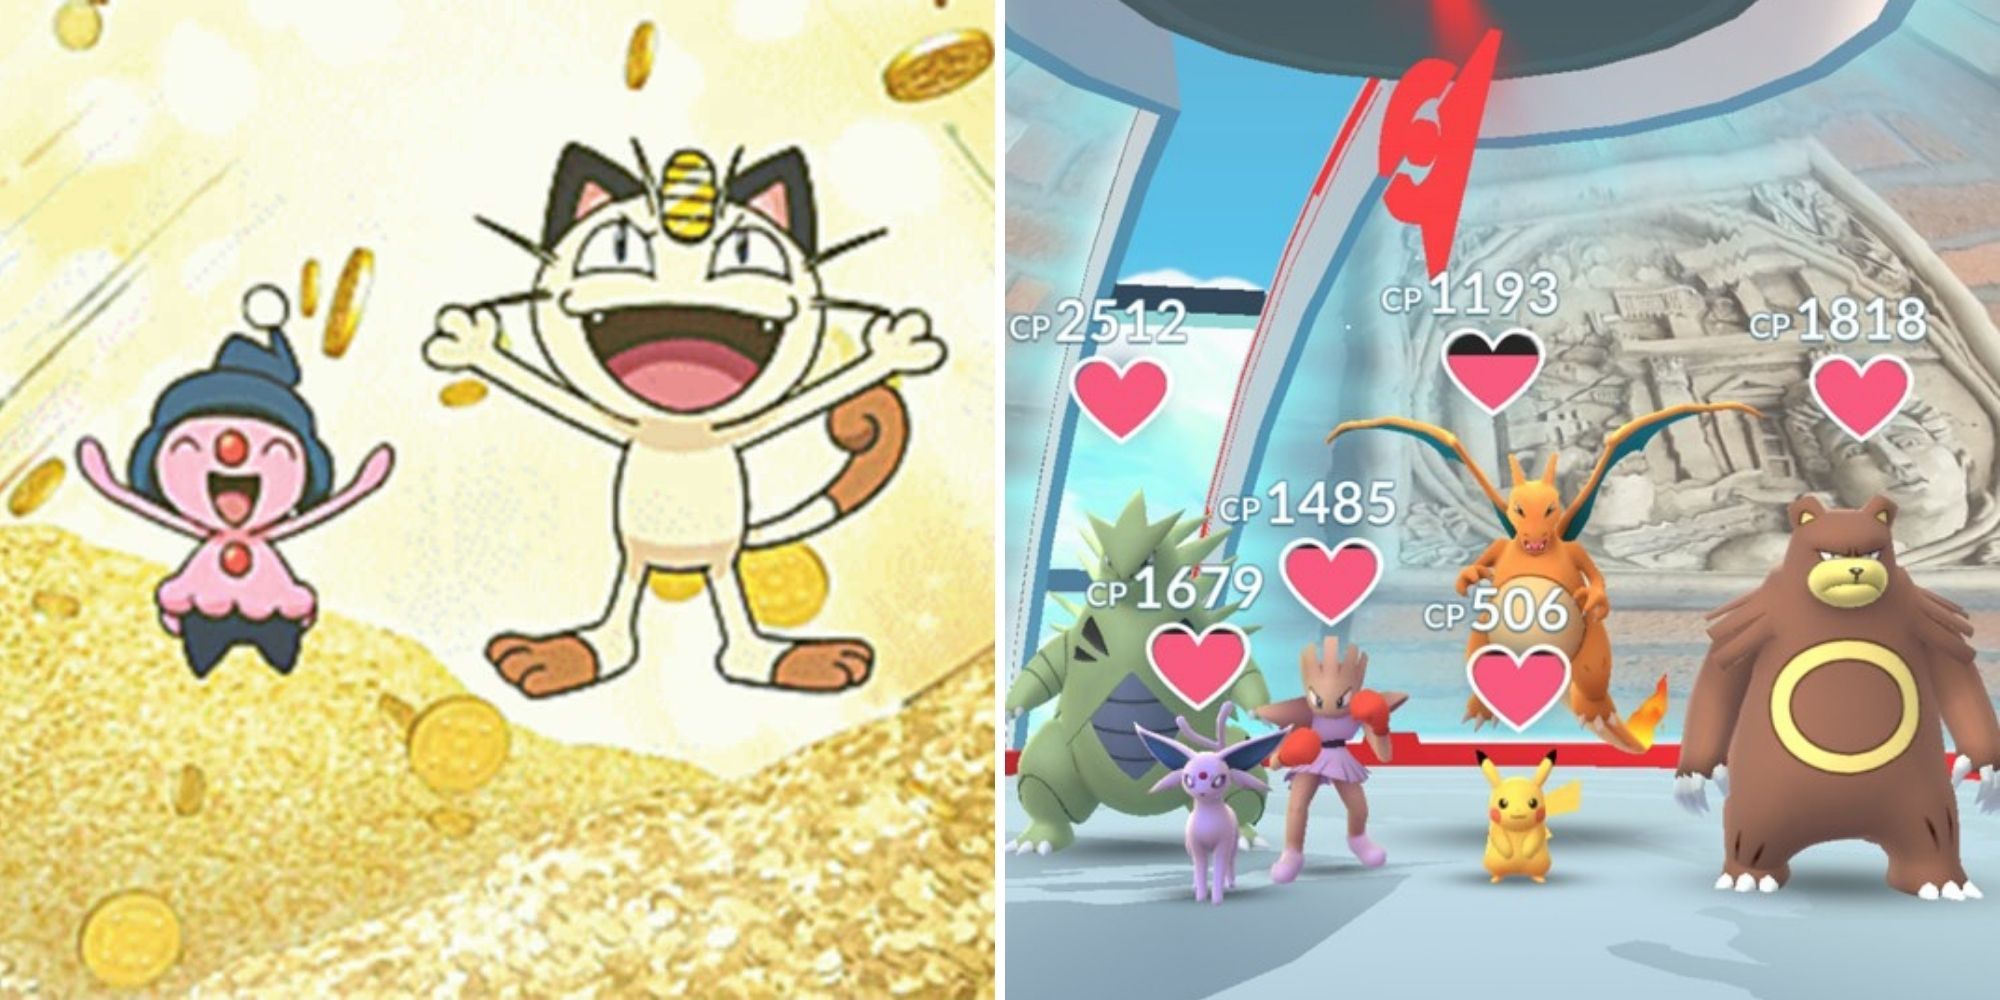 Pokemon Go Meowth In Pokecoin Pile (მარცხნივ), სპორტული დარბაზი პოკემონით (მარჯვნივ)